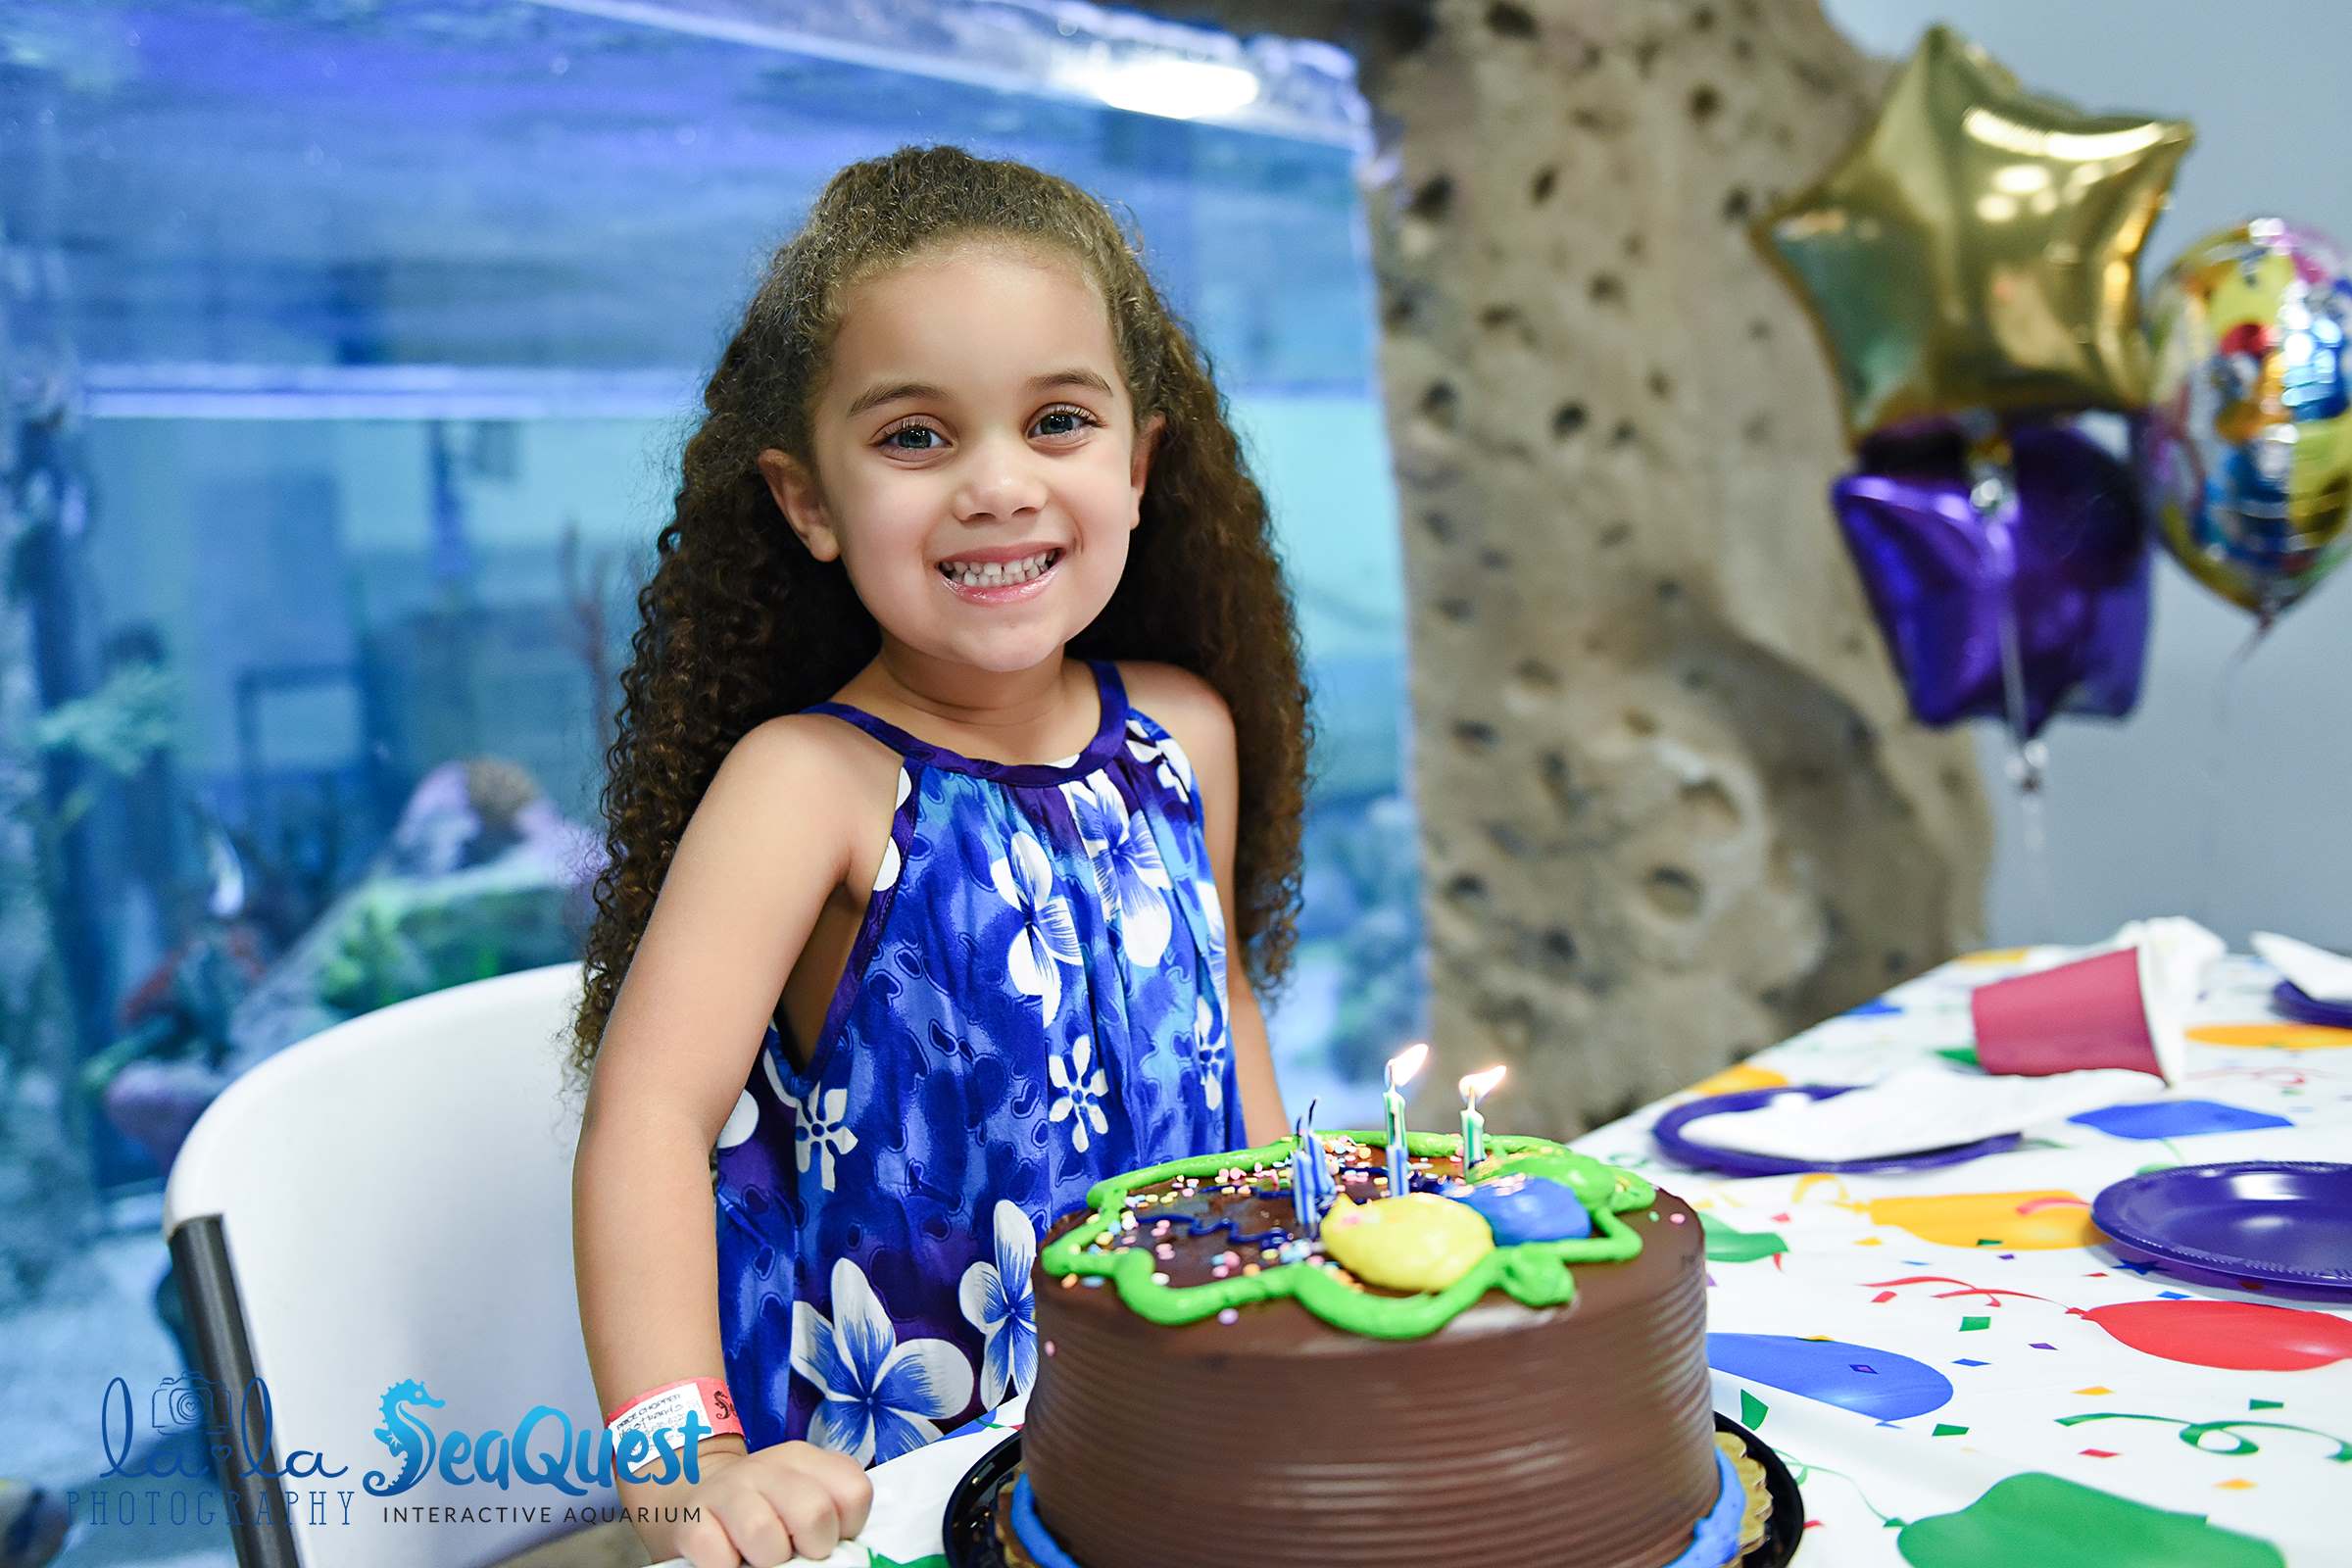 Birthday Girl with cake at SeaQuest Aquarium